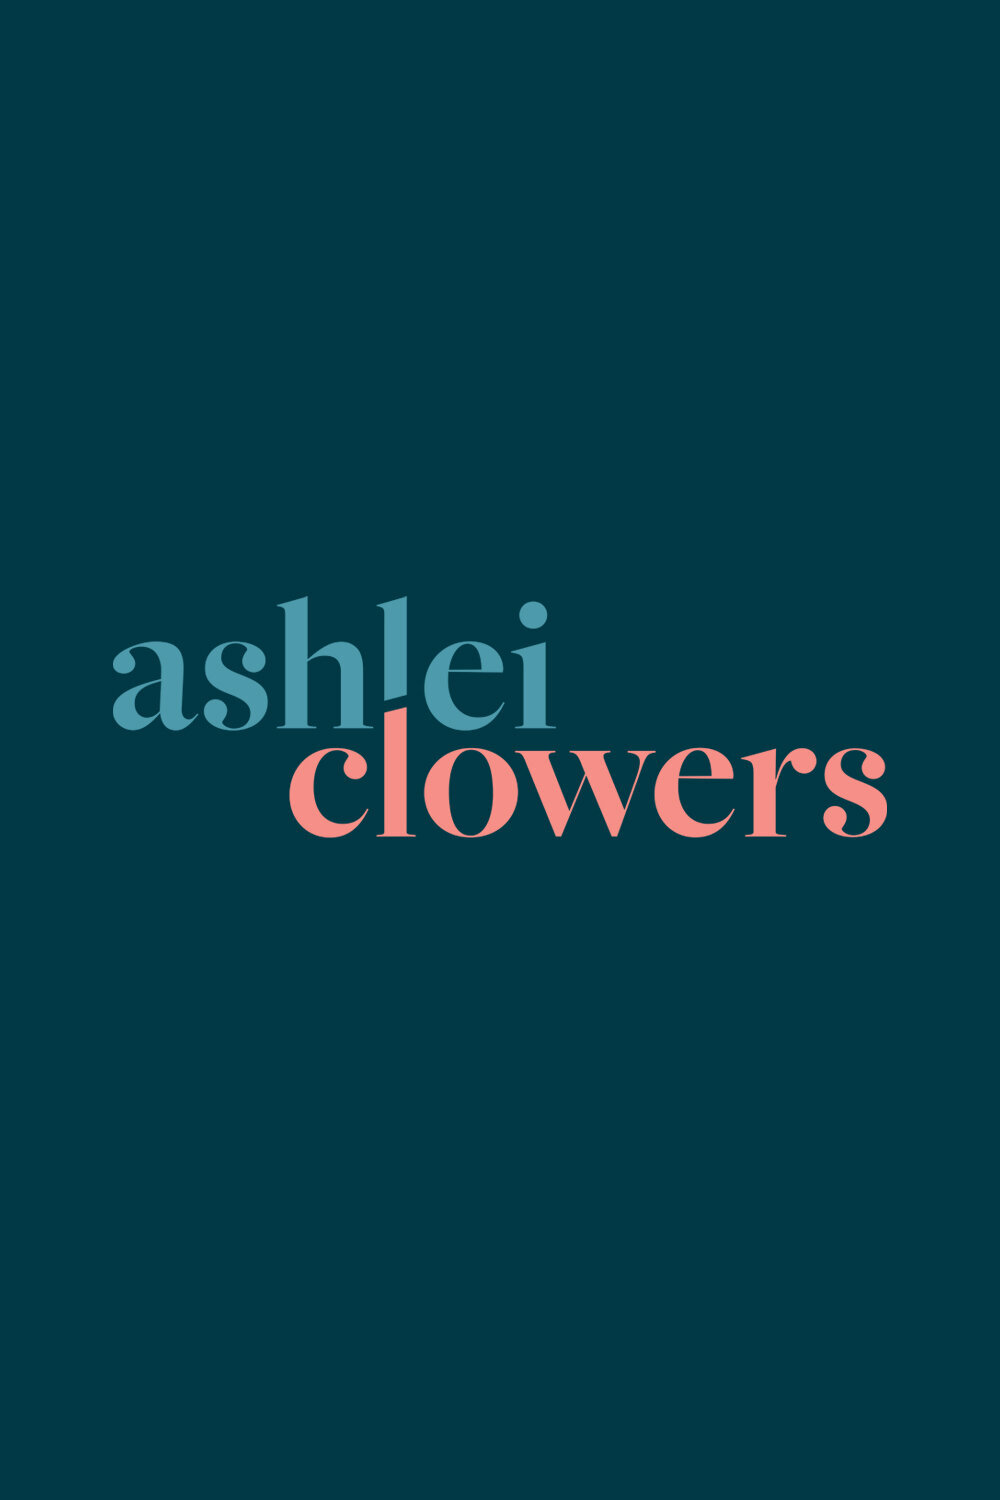 ashlei clowers logo on dark background